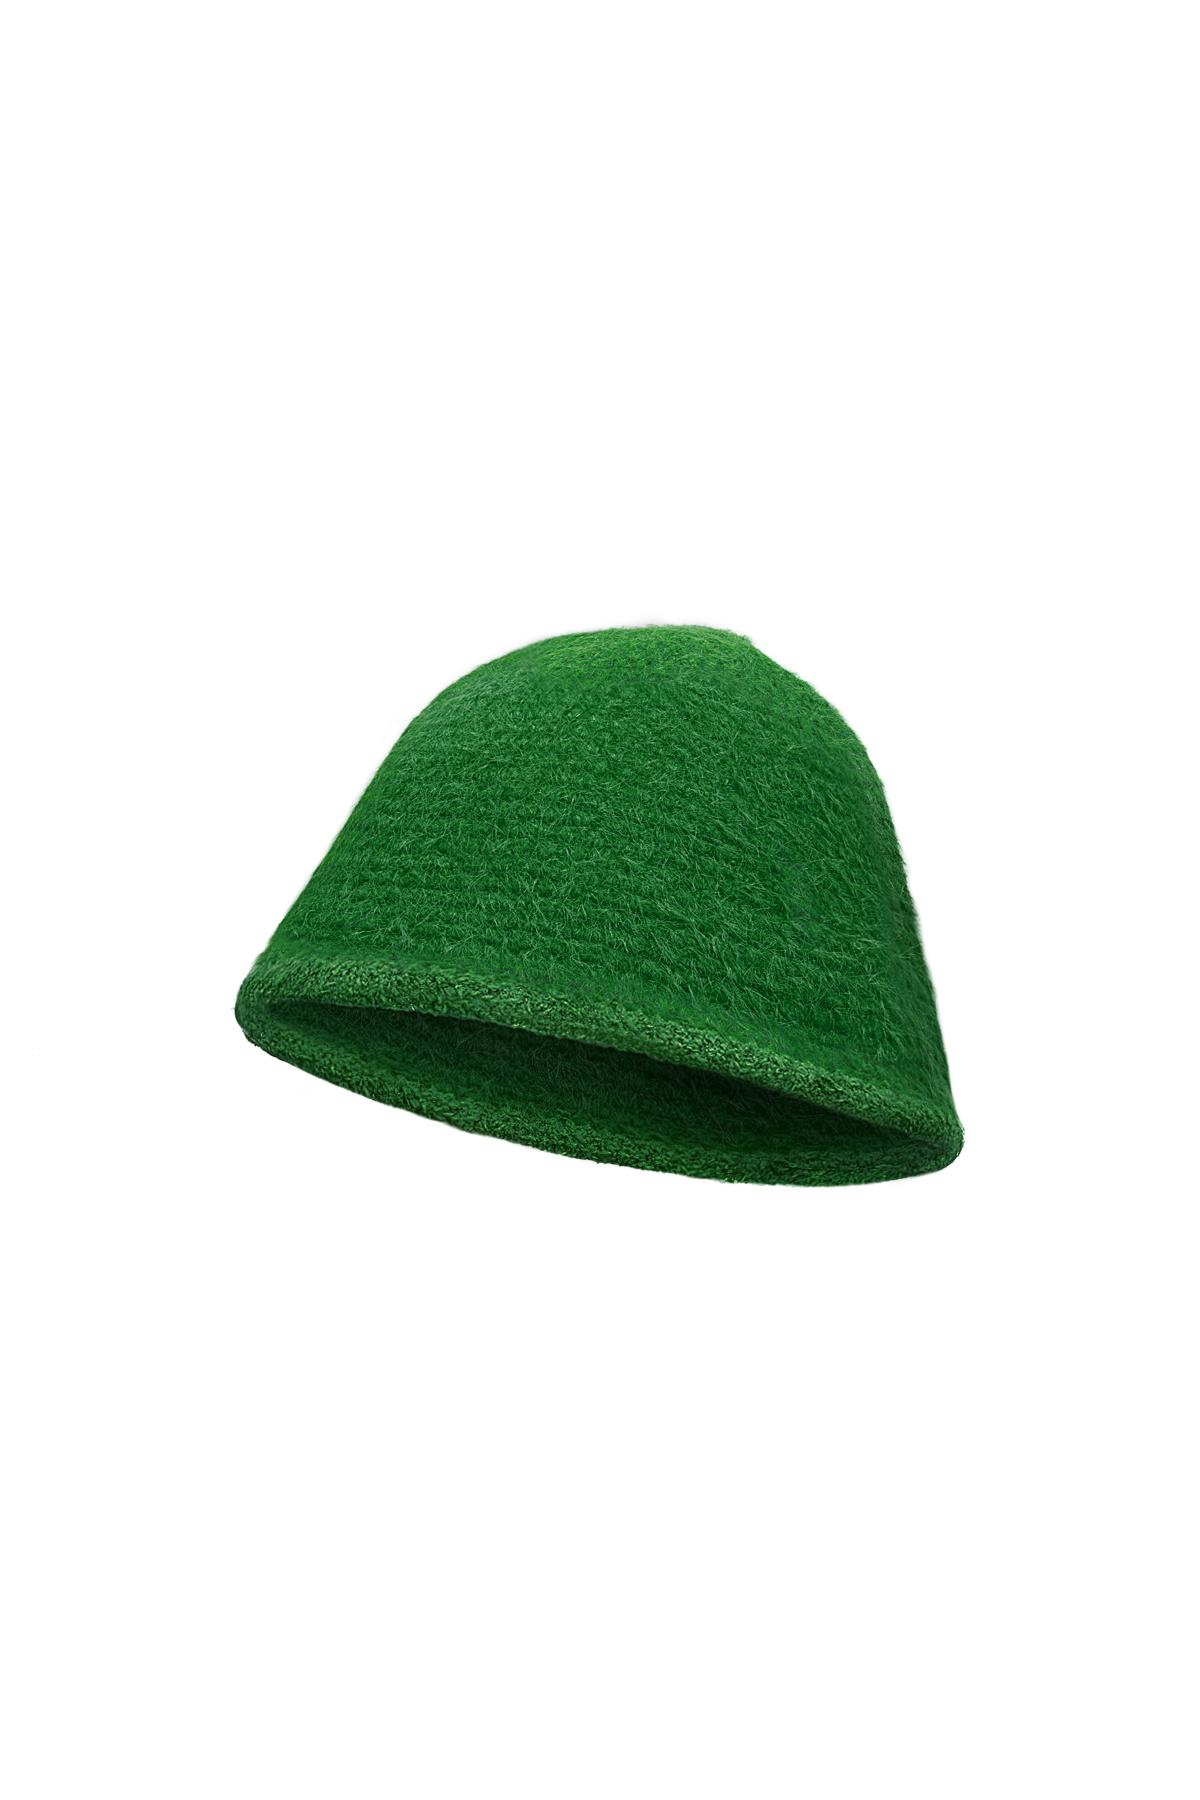 Fisherman's hat basic Green Polyester h5 